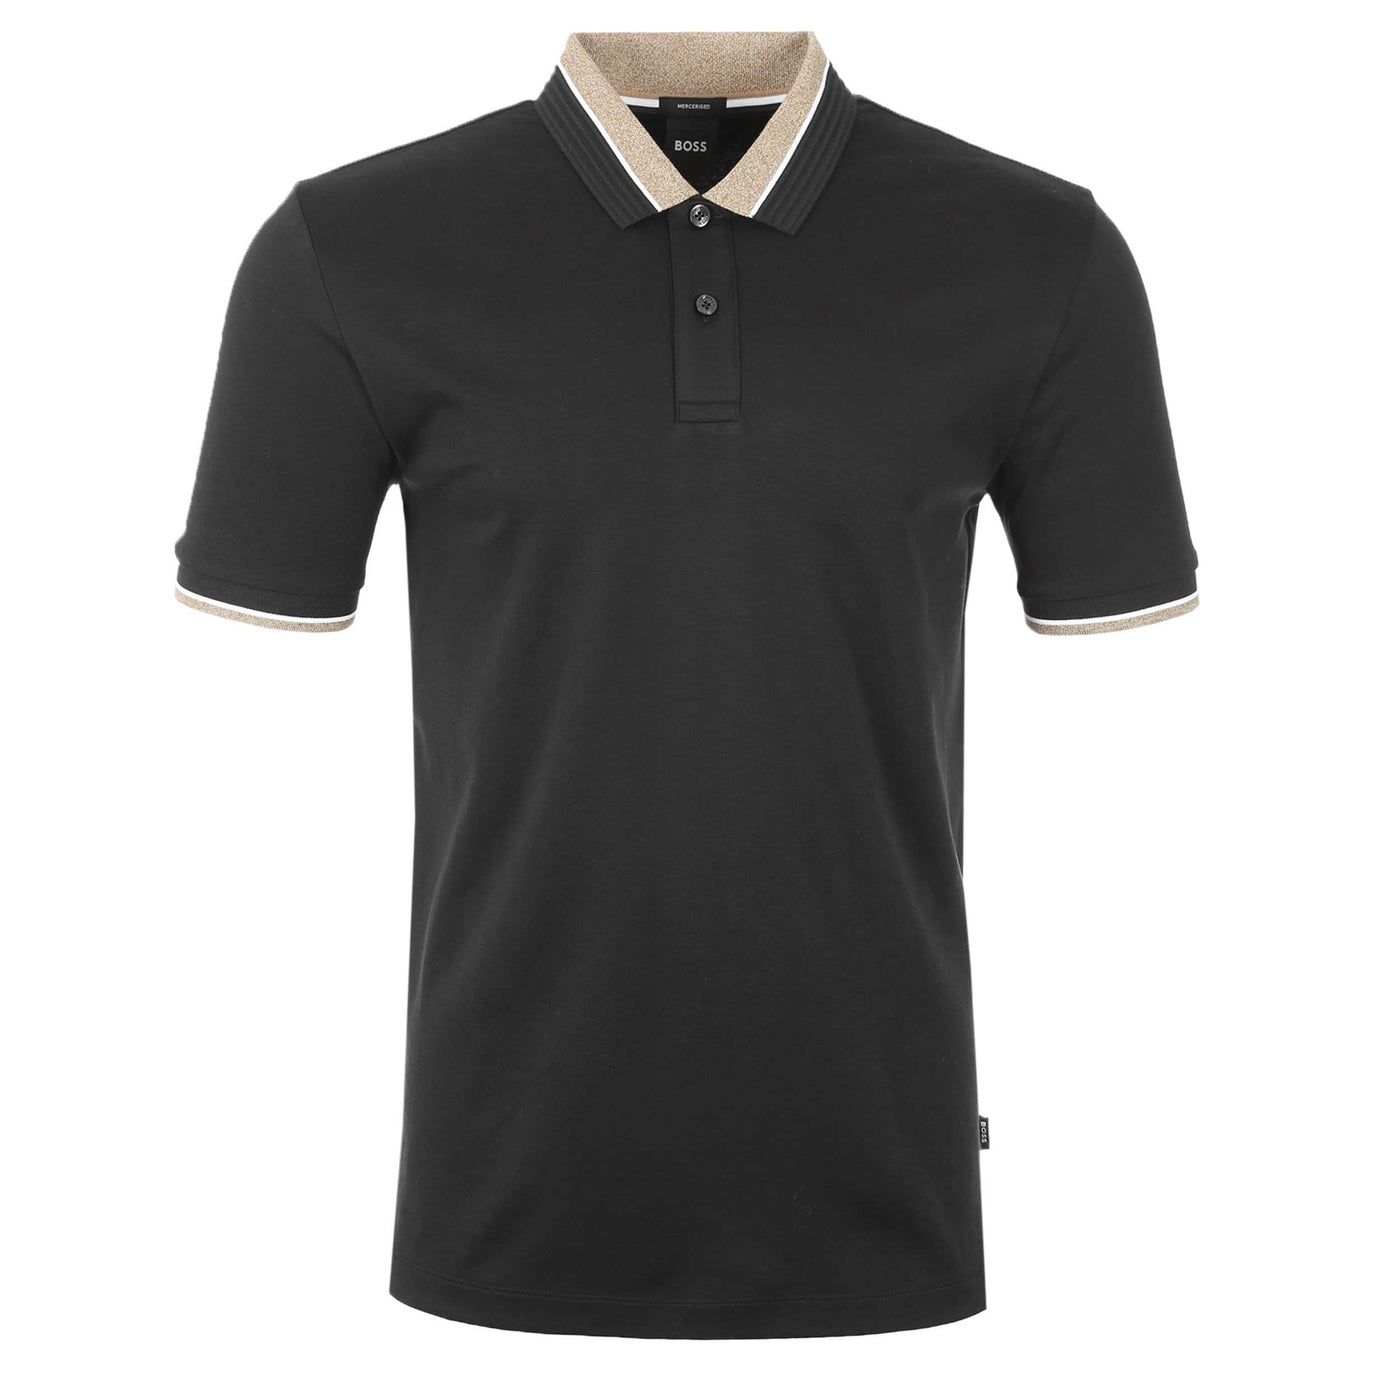 BOSS Parlay 200 Polo Shirt in Black